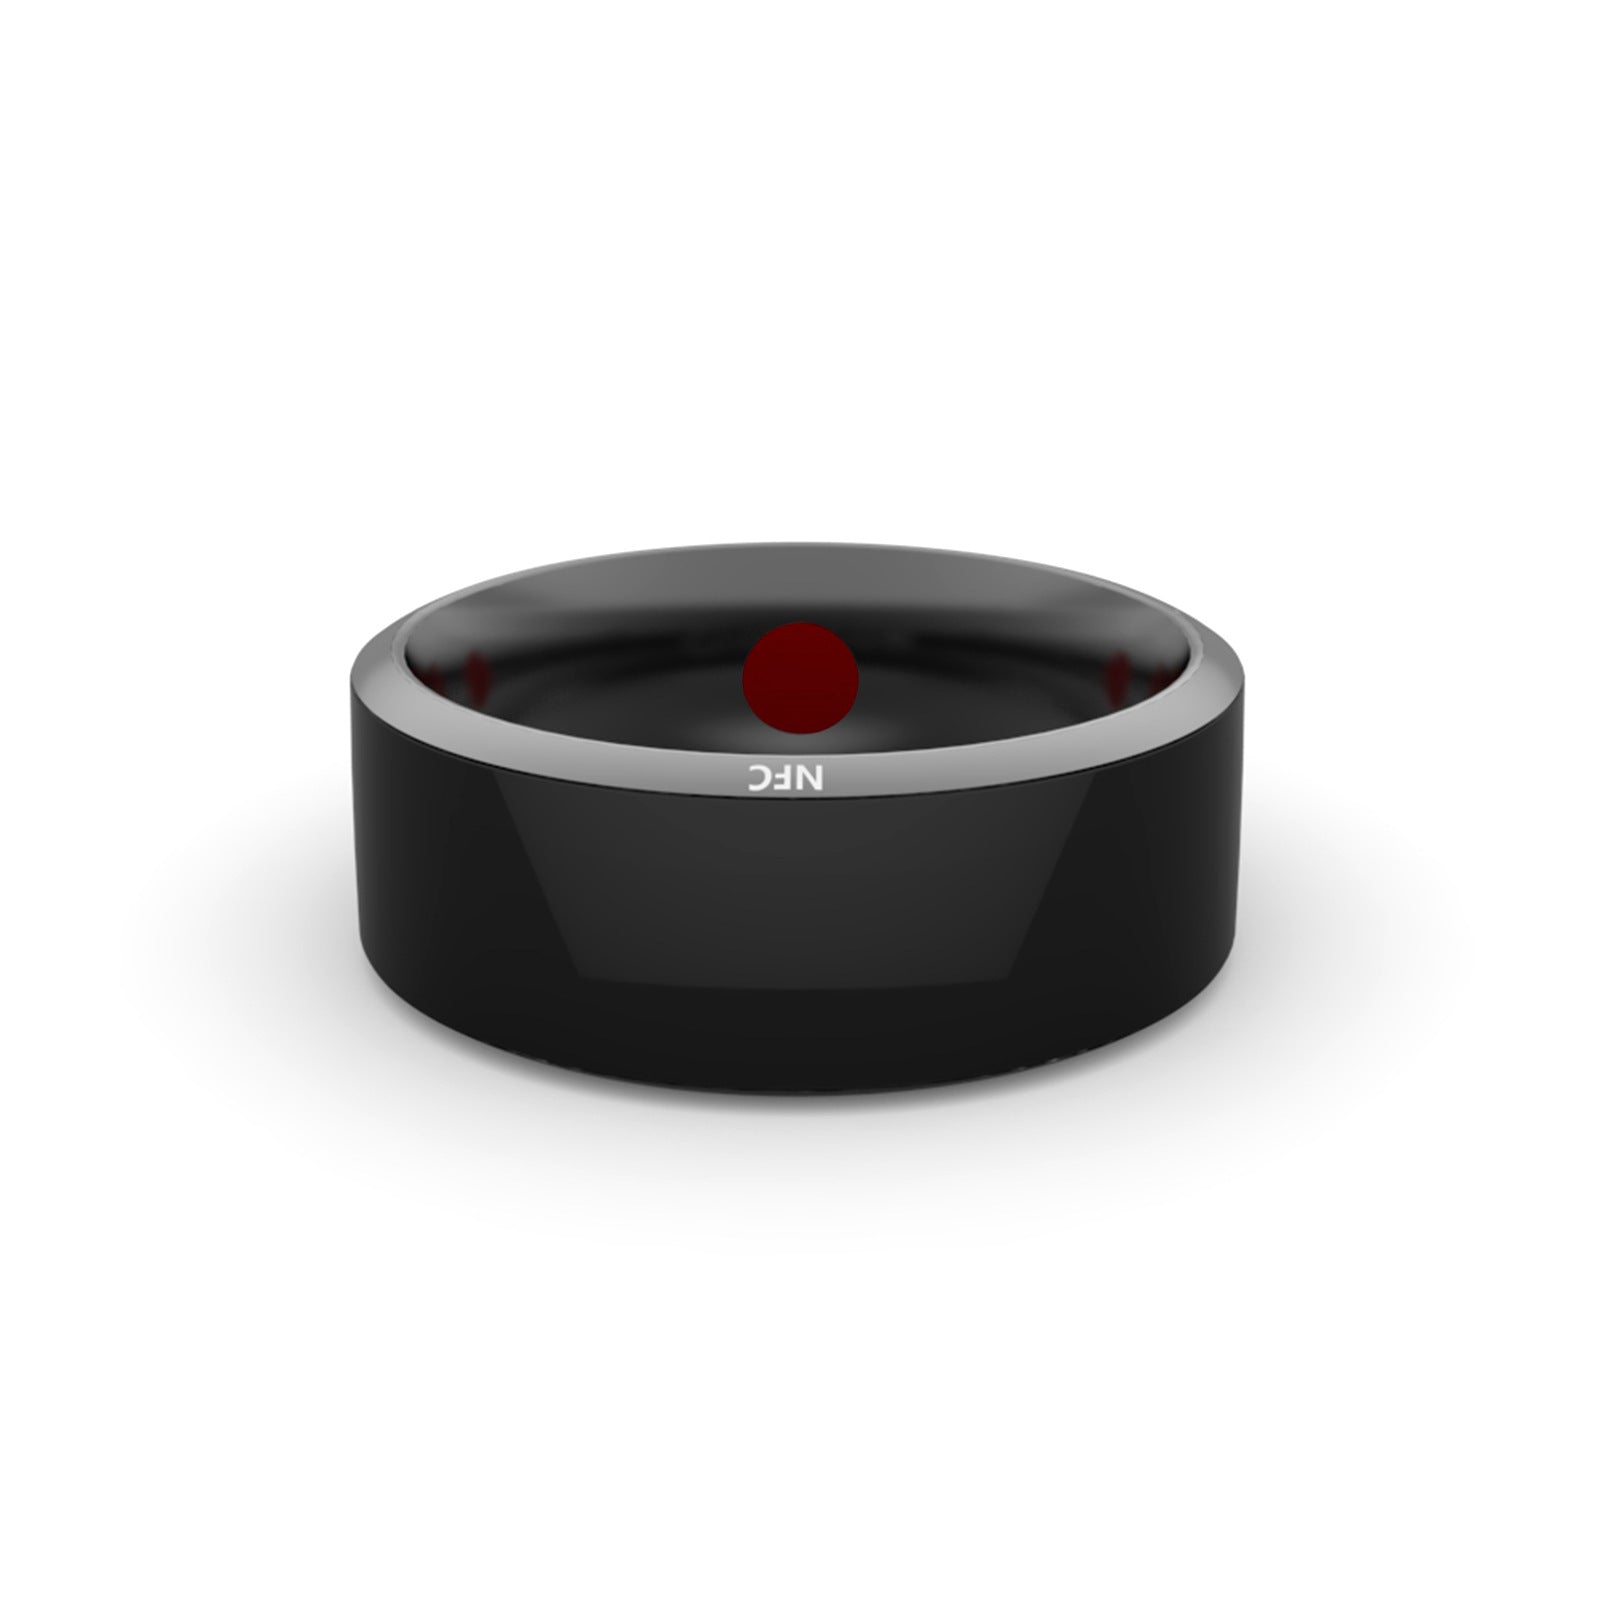 Smart Ring NFC Audio Video *NEU